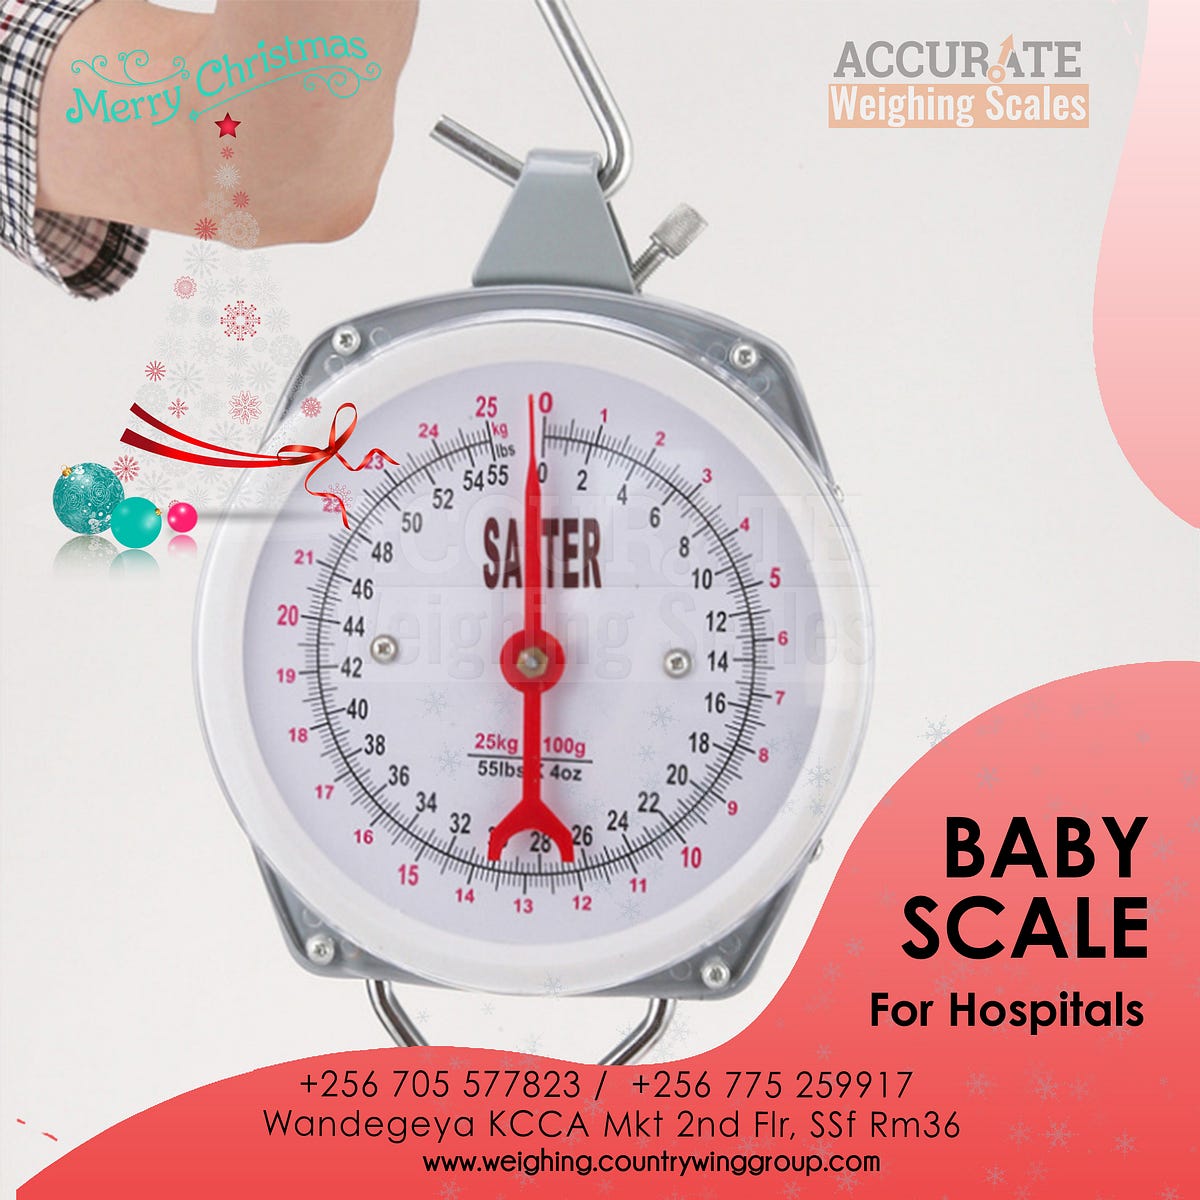 Where to get buy an electronic baby weighing scales in Kampala Uganda